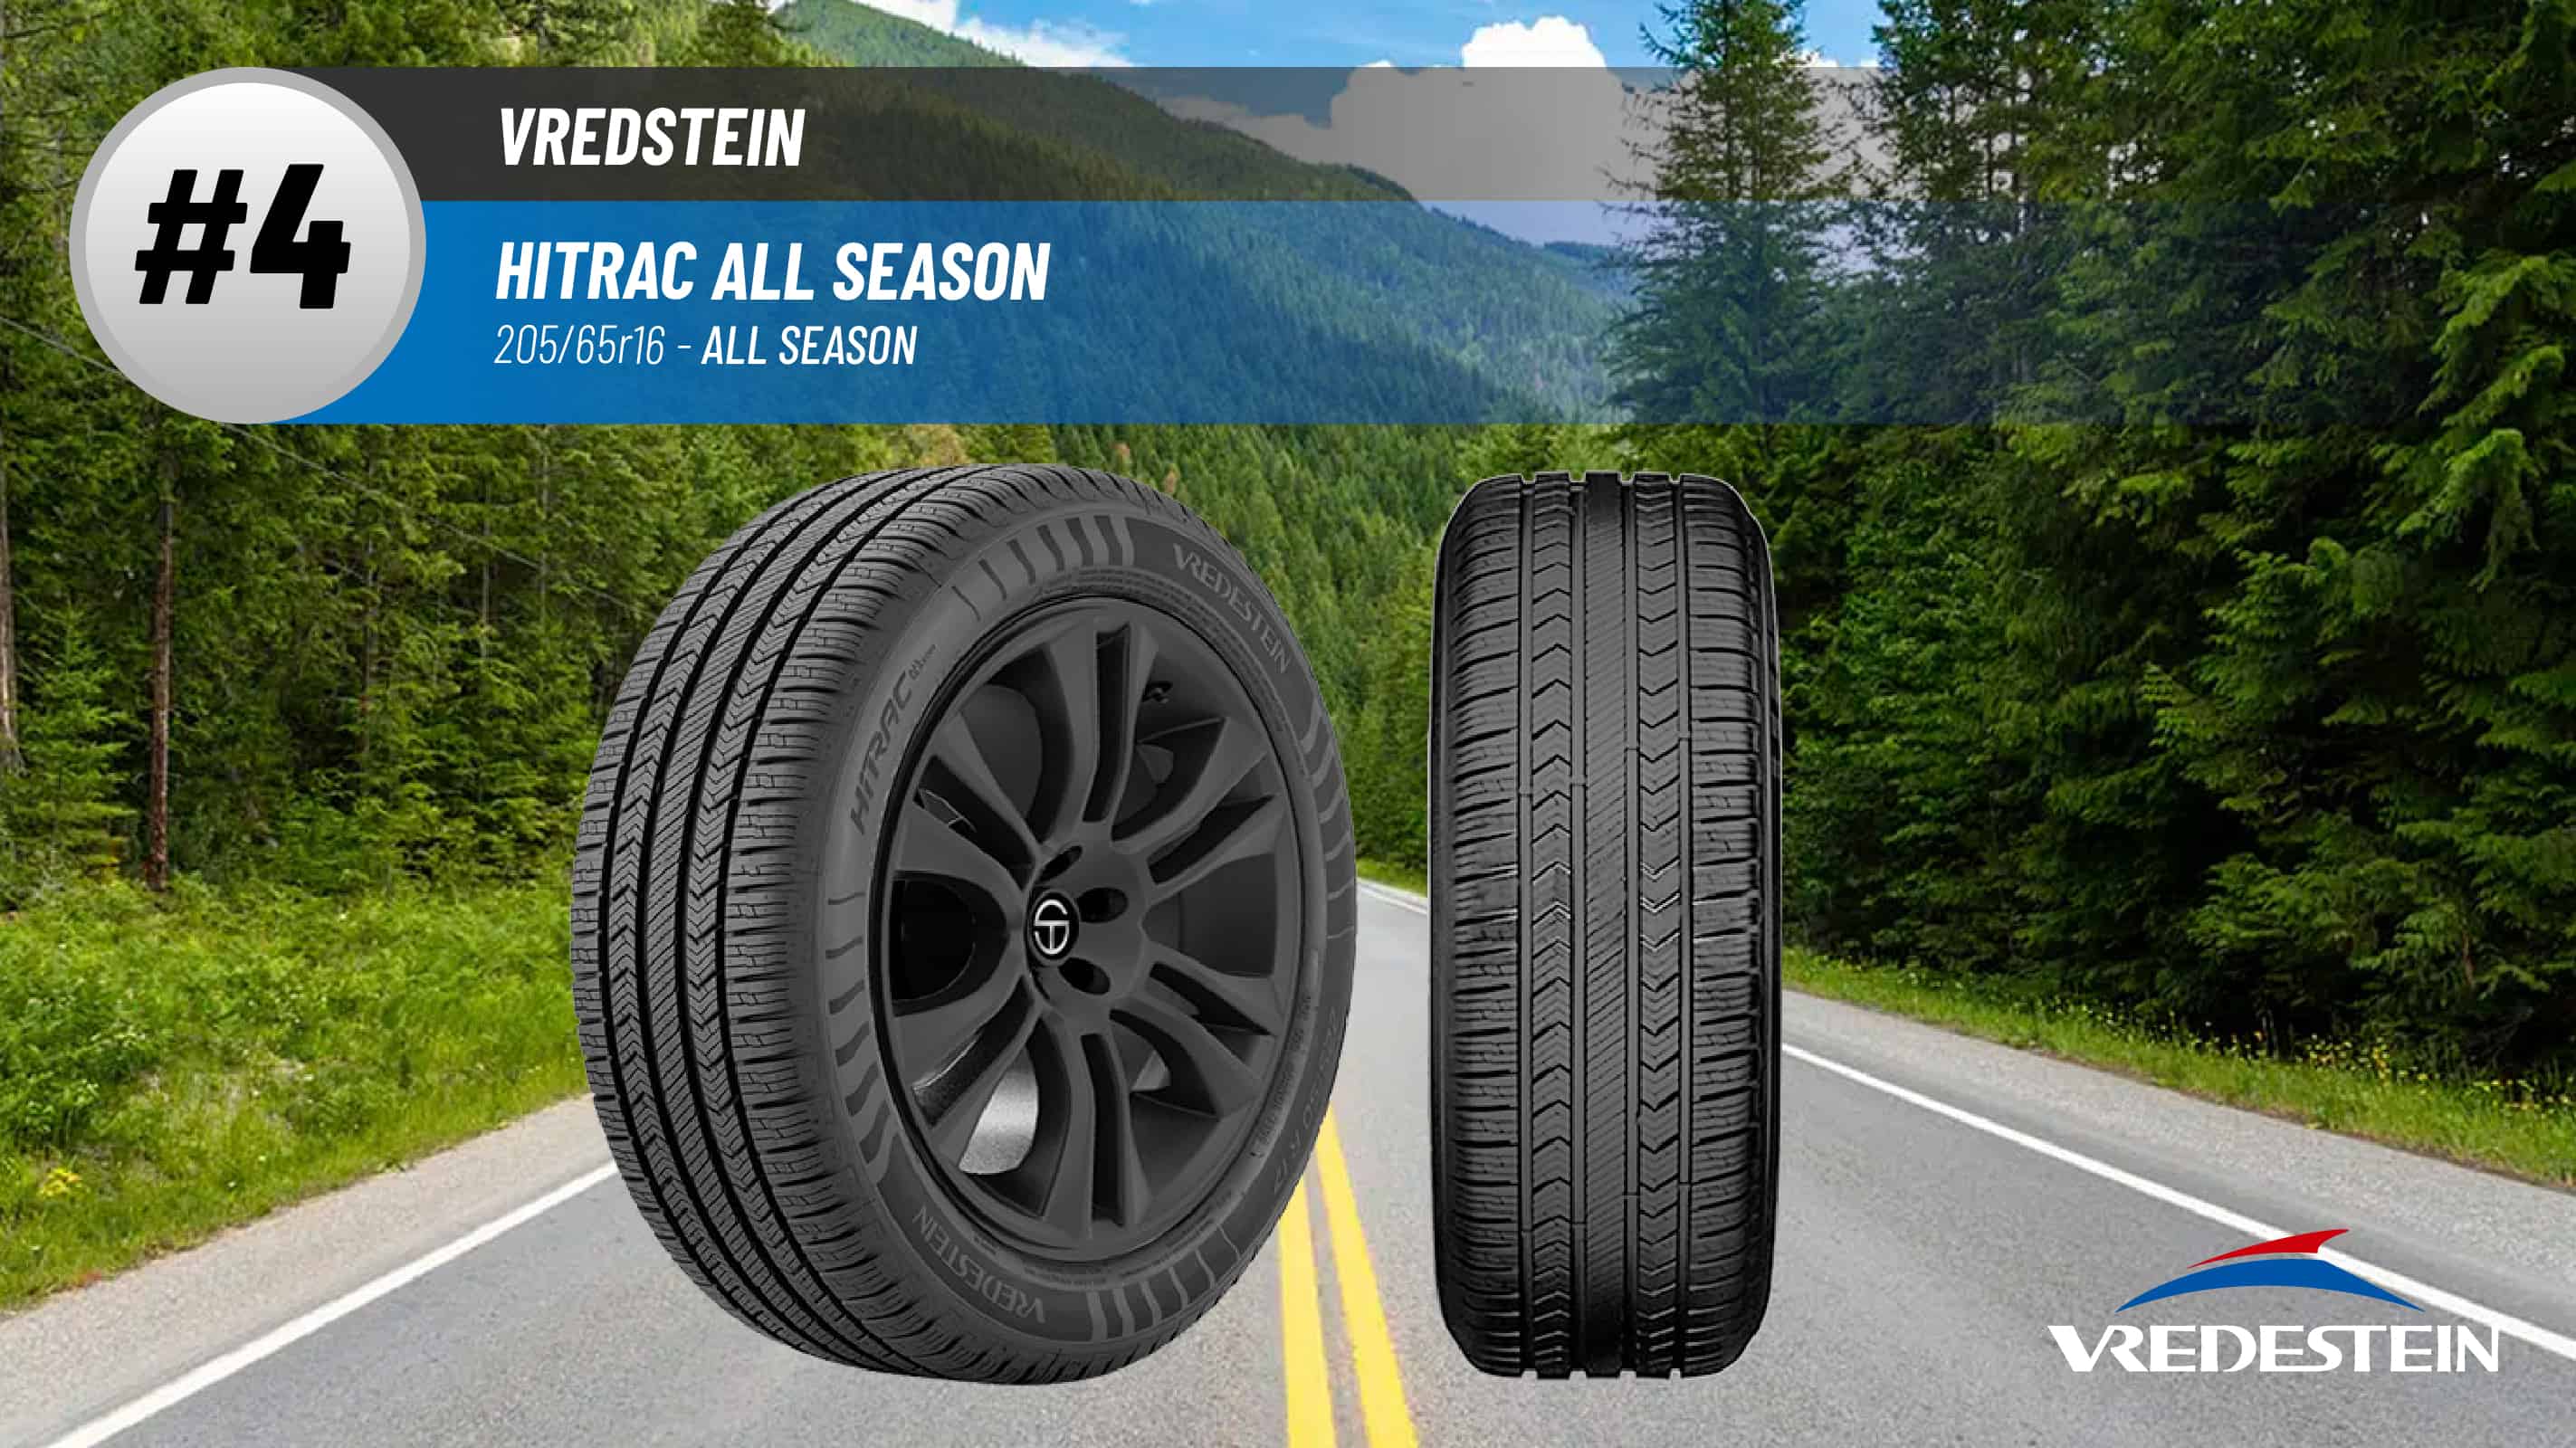 Top #4 All Season Tires: Vredstein Hitrac All Season – best 205/65 R16